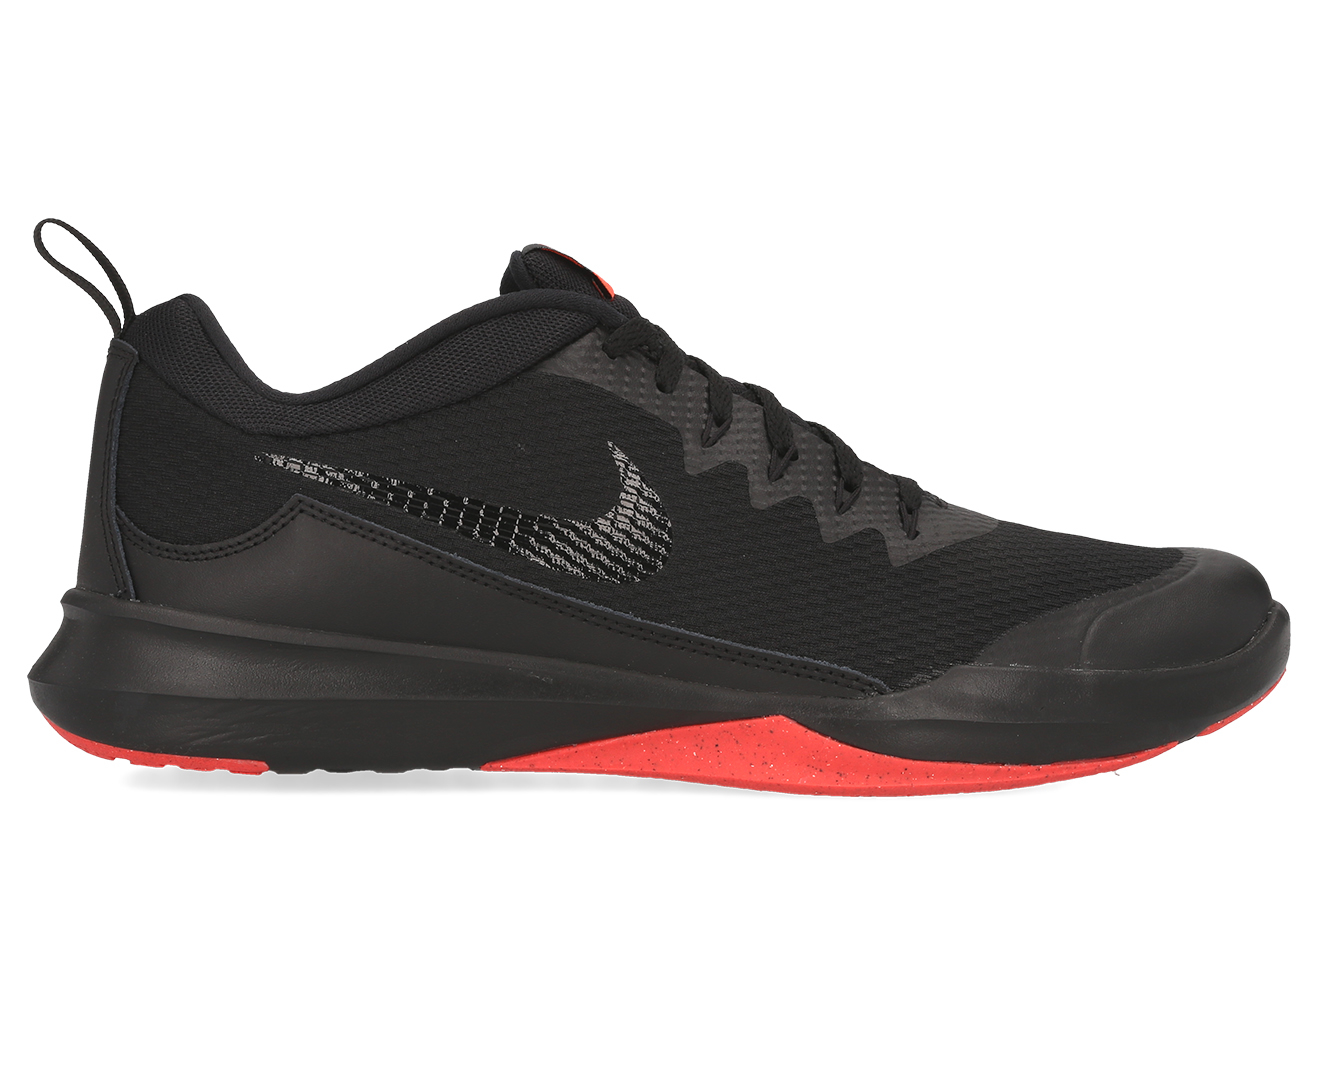 Nike Men's Legend Trainer Shoe - Black/Black Crimson | eBay